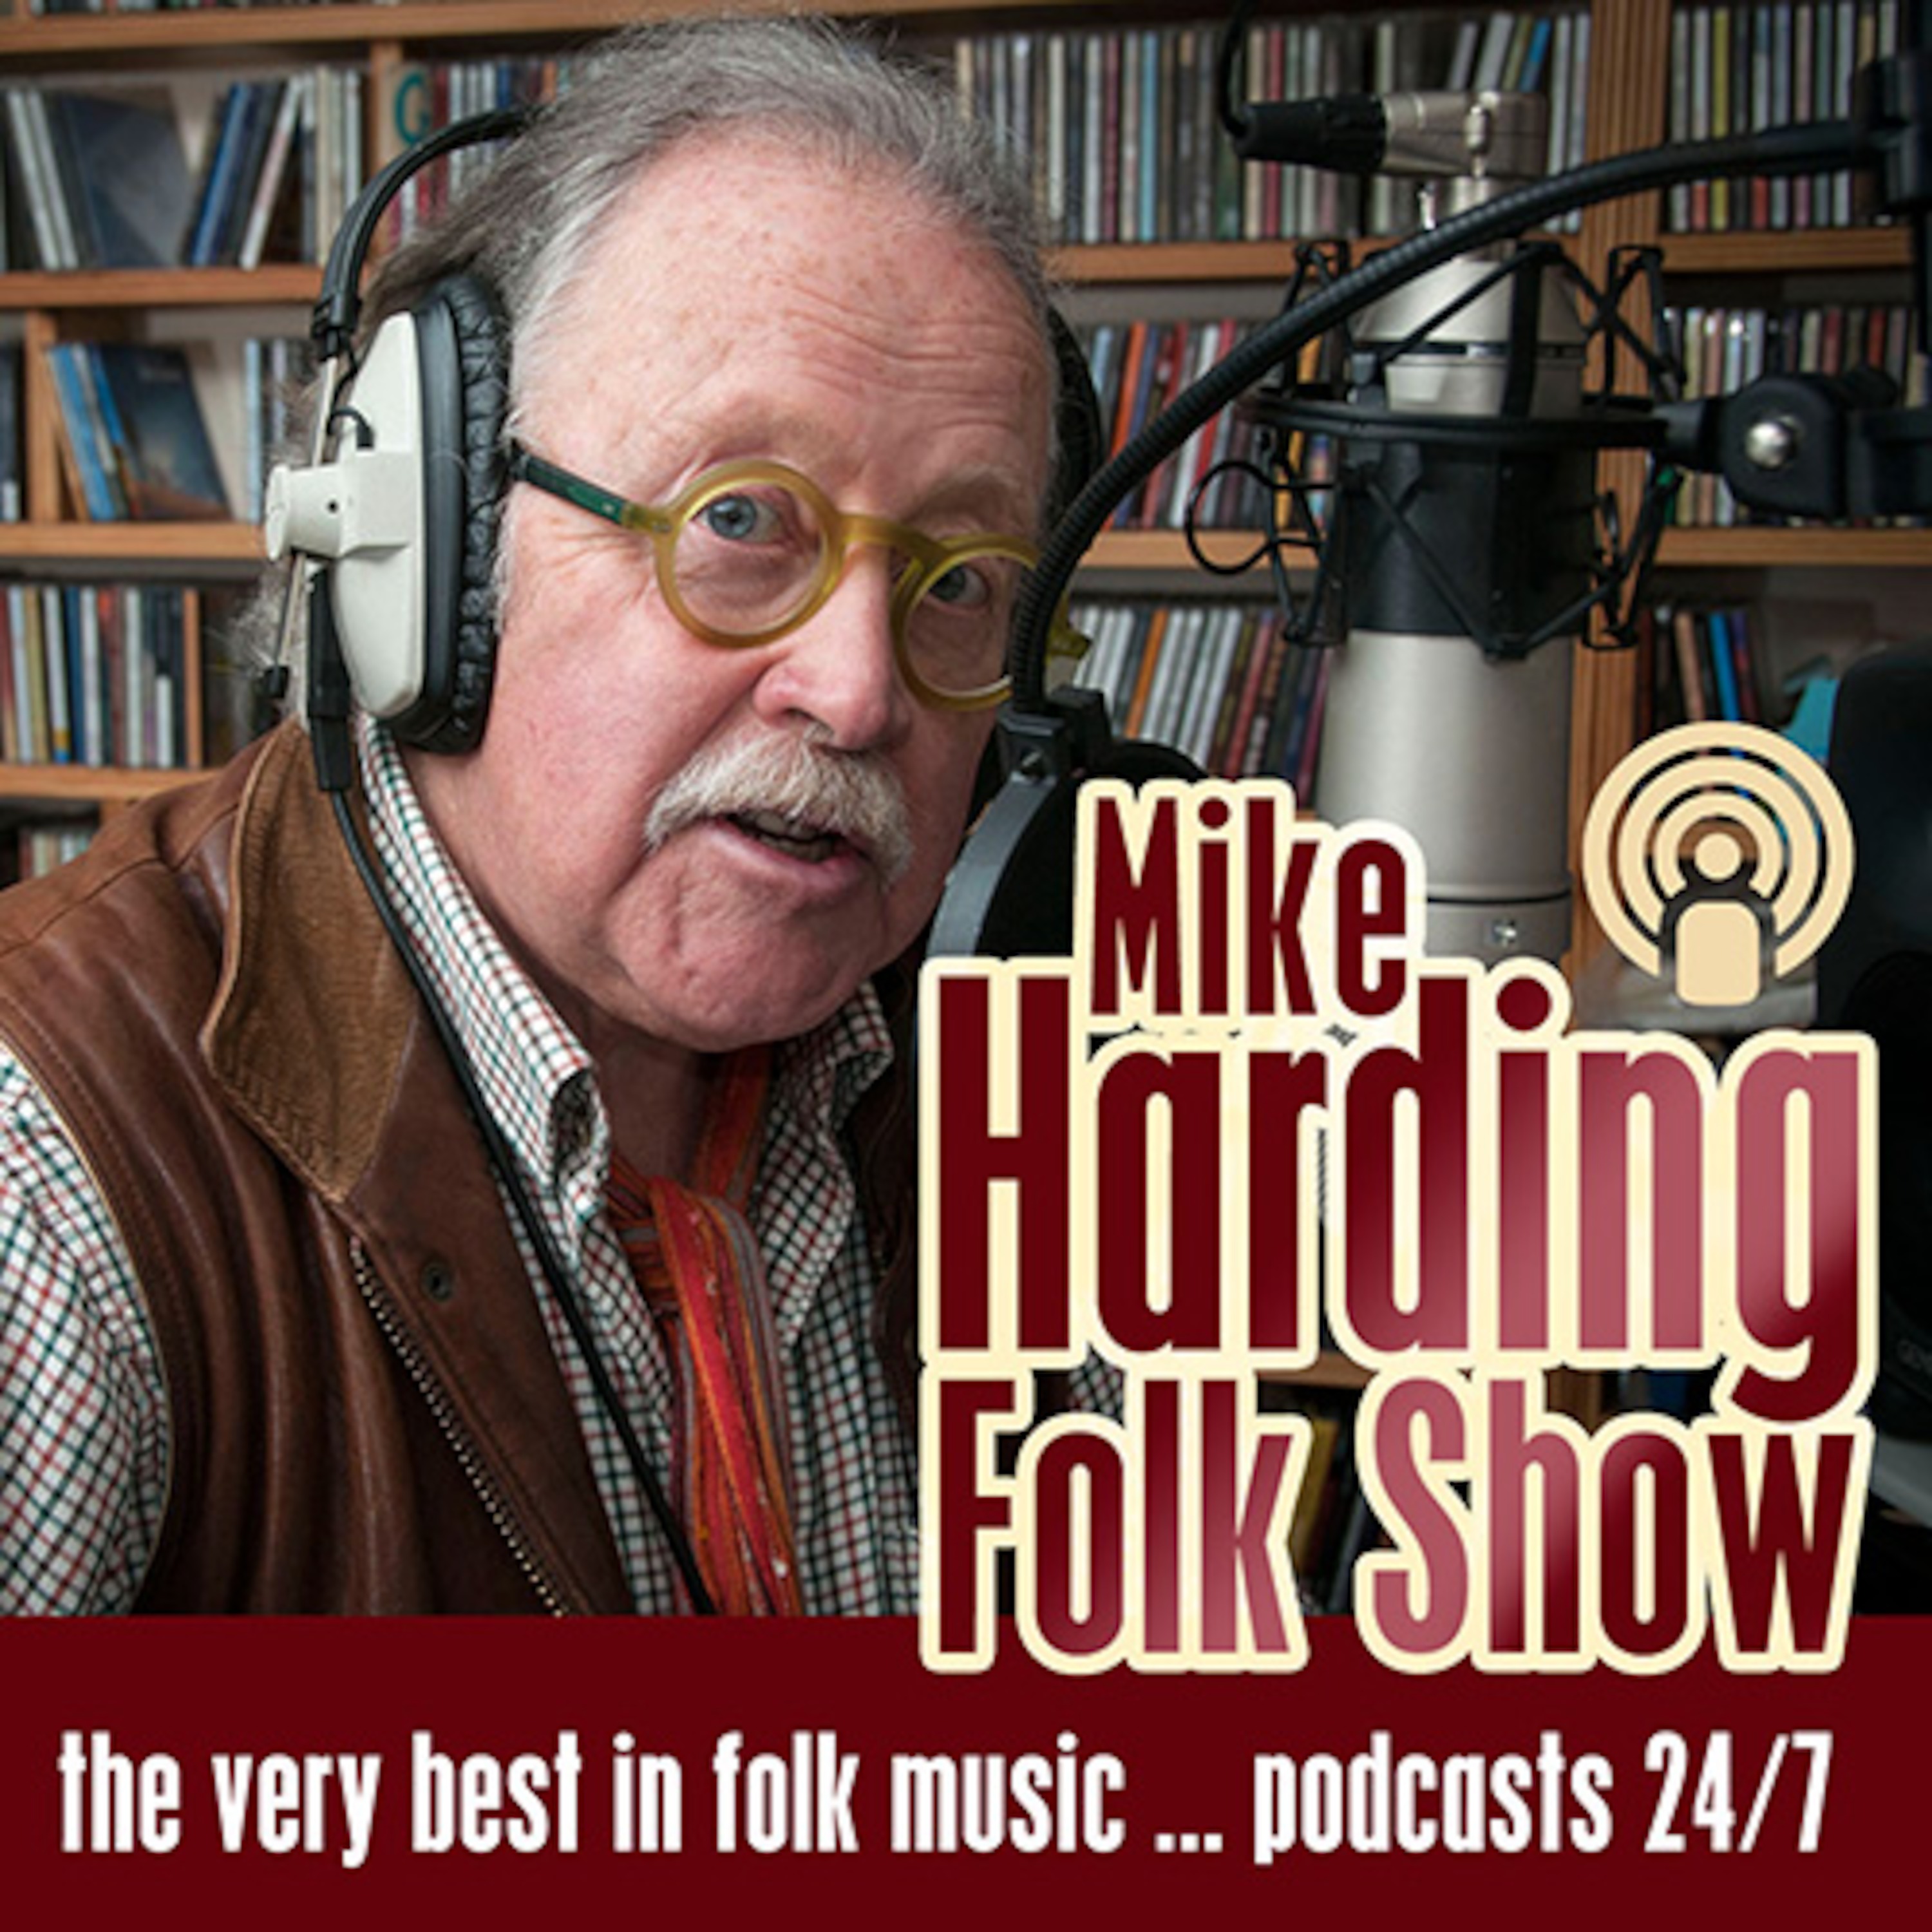 Mike Harding Folk Show 92